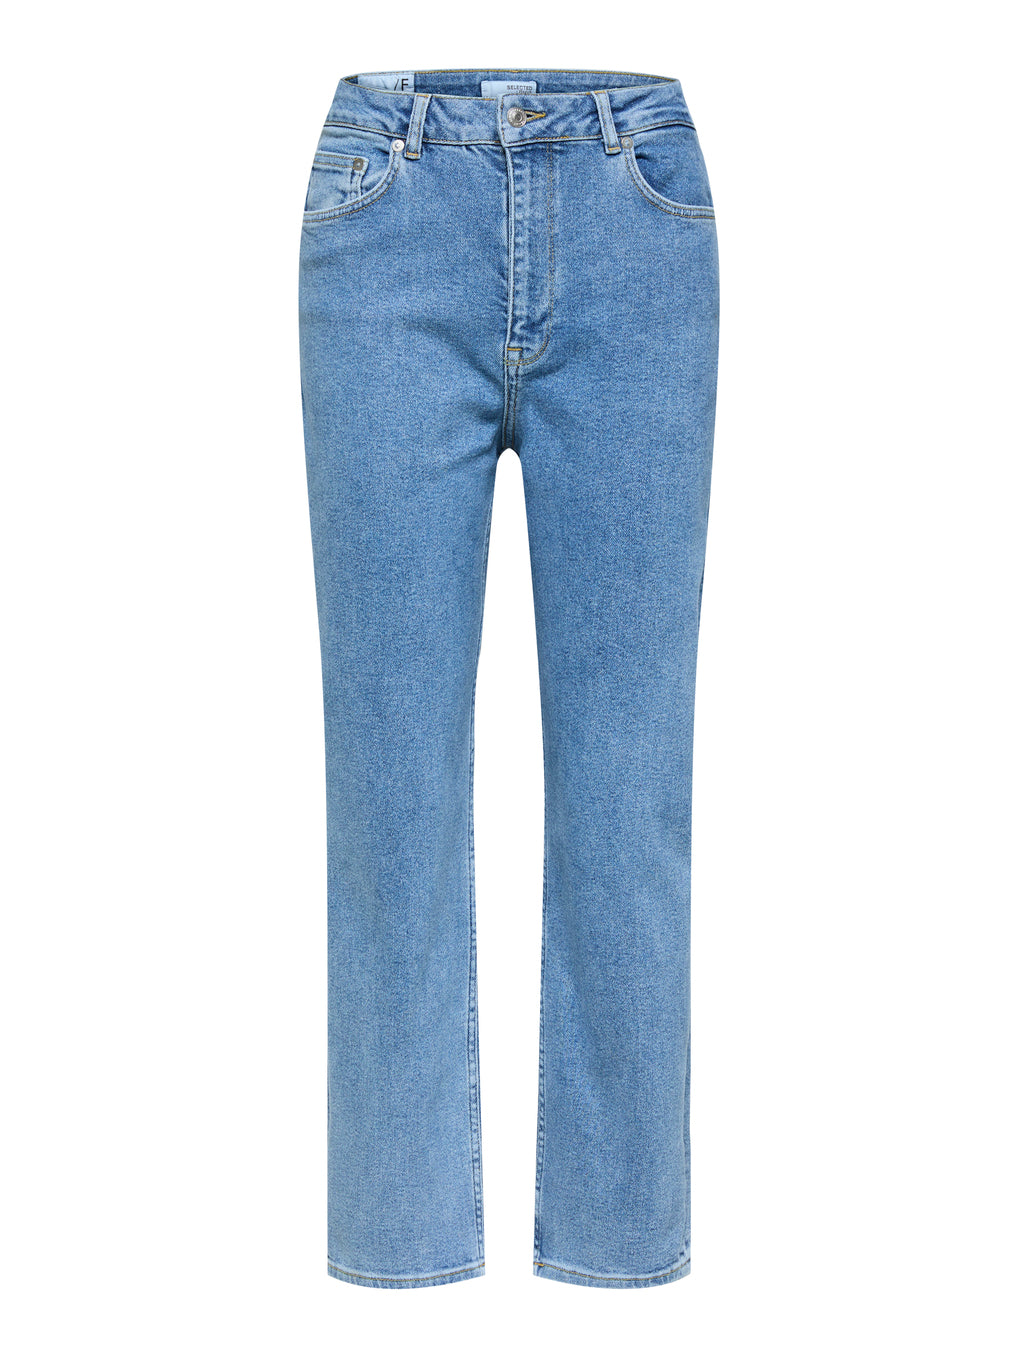 light blue denim jeans selected femme